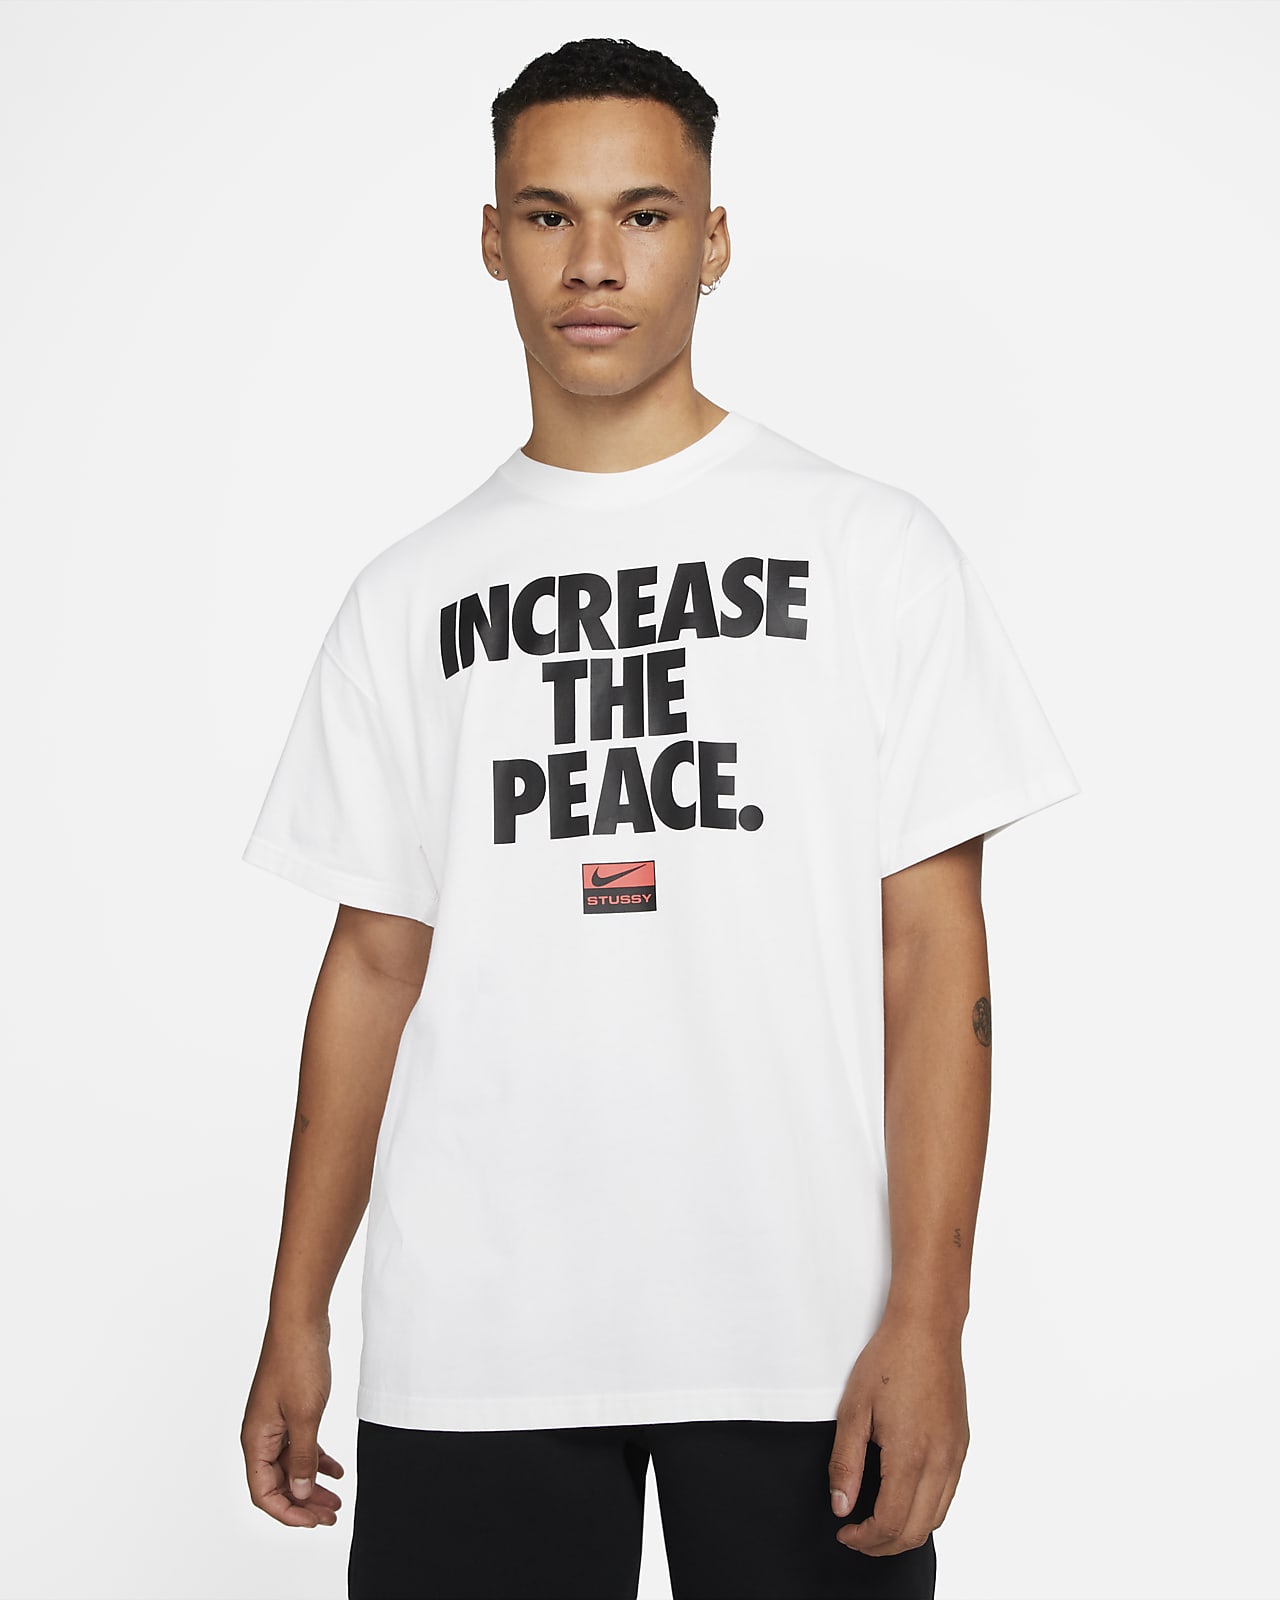 stussy nike increase the peace t shirt